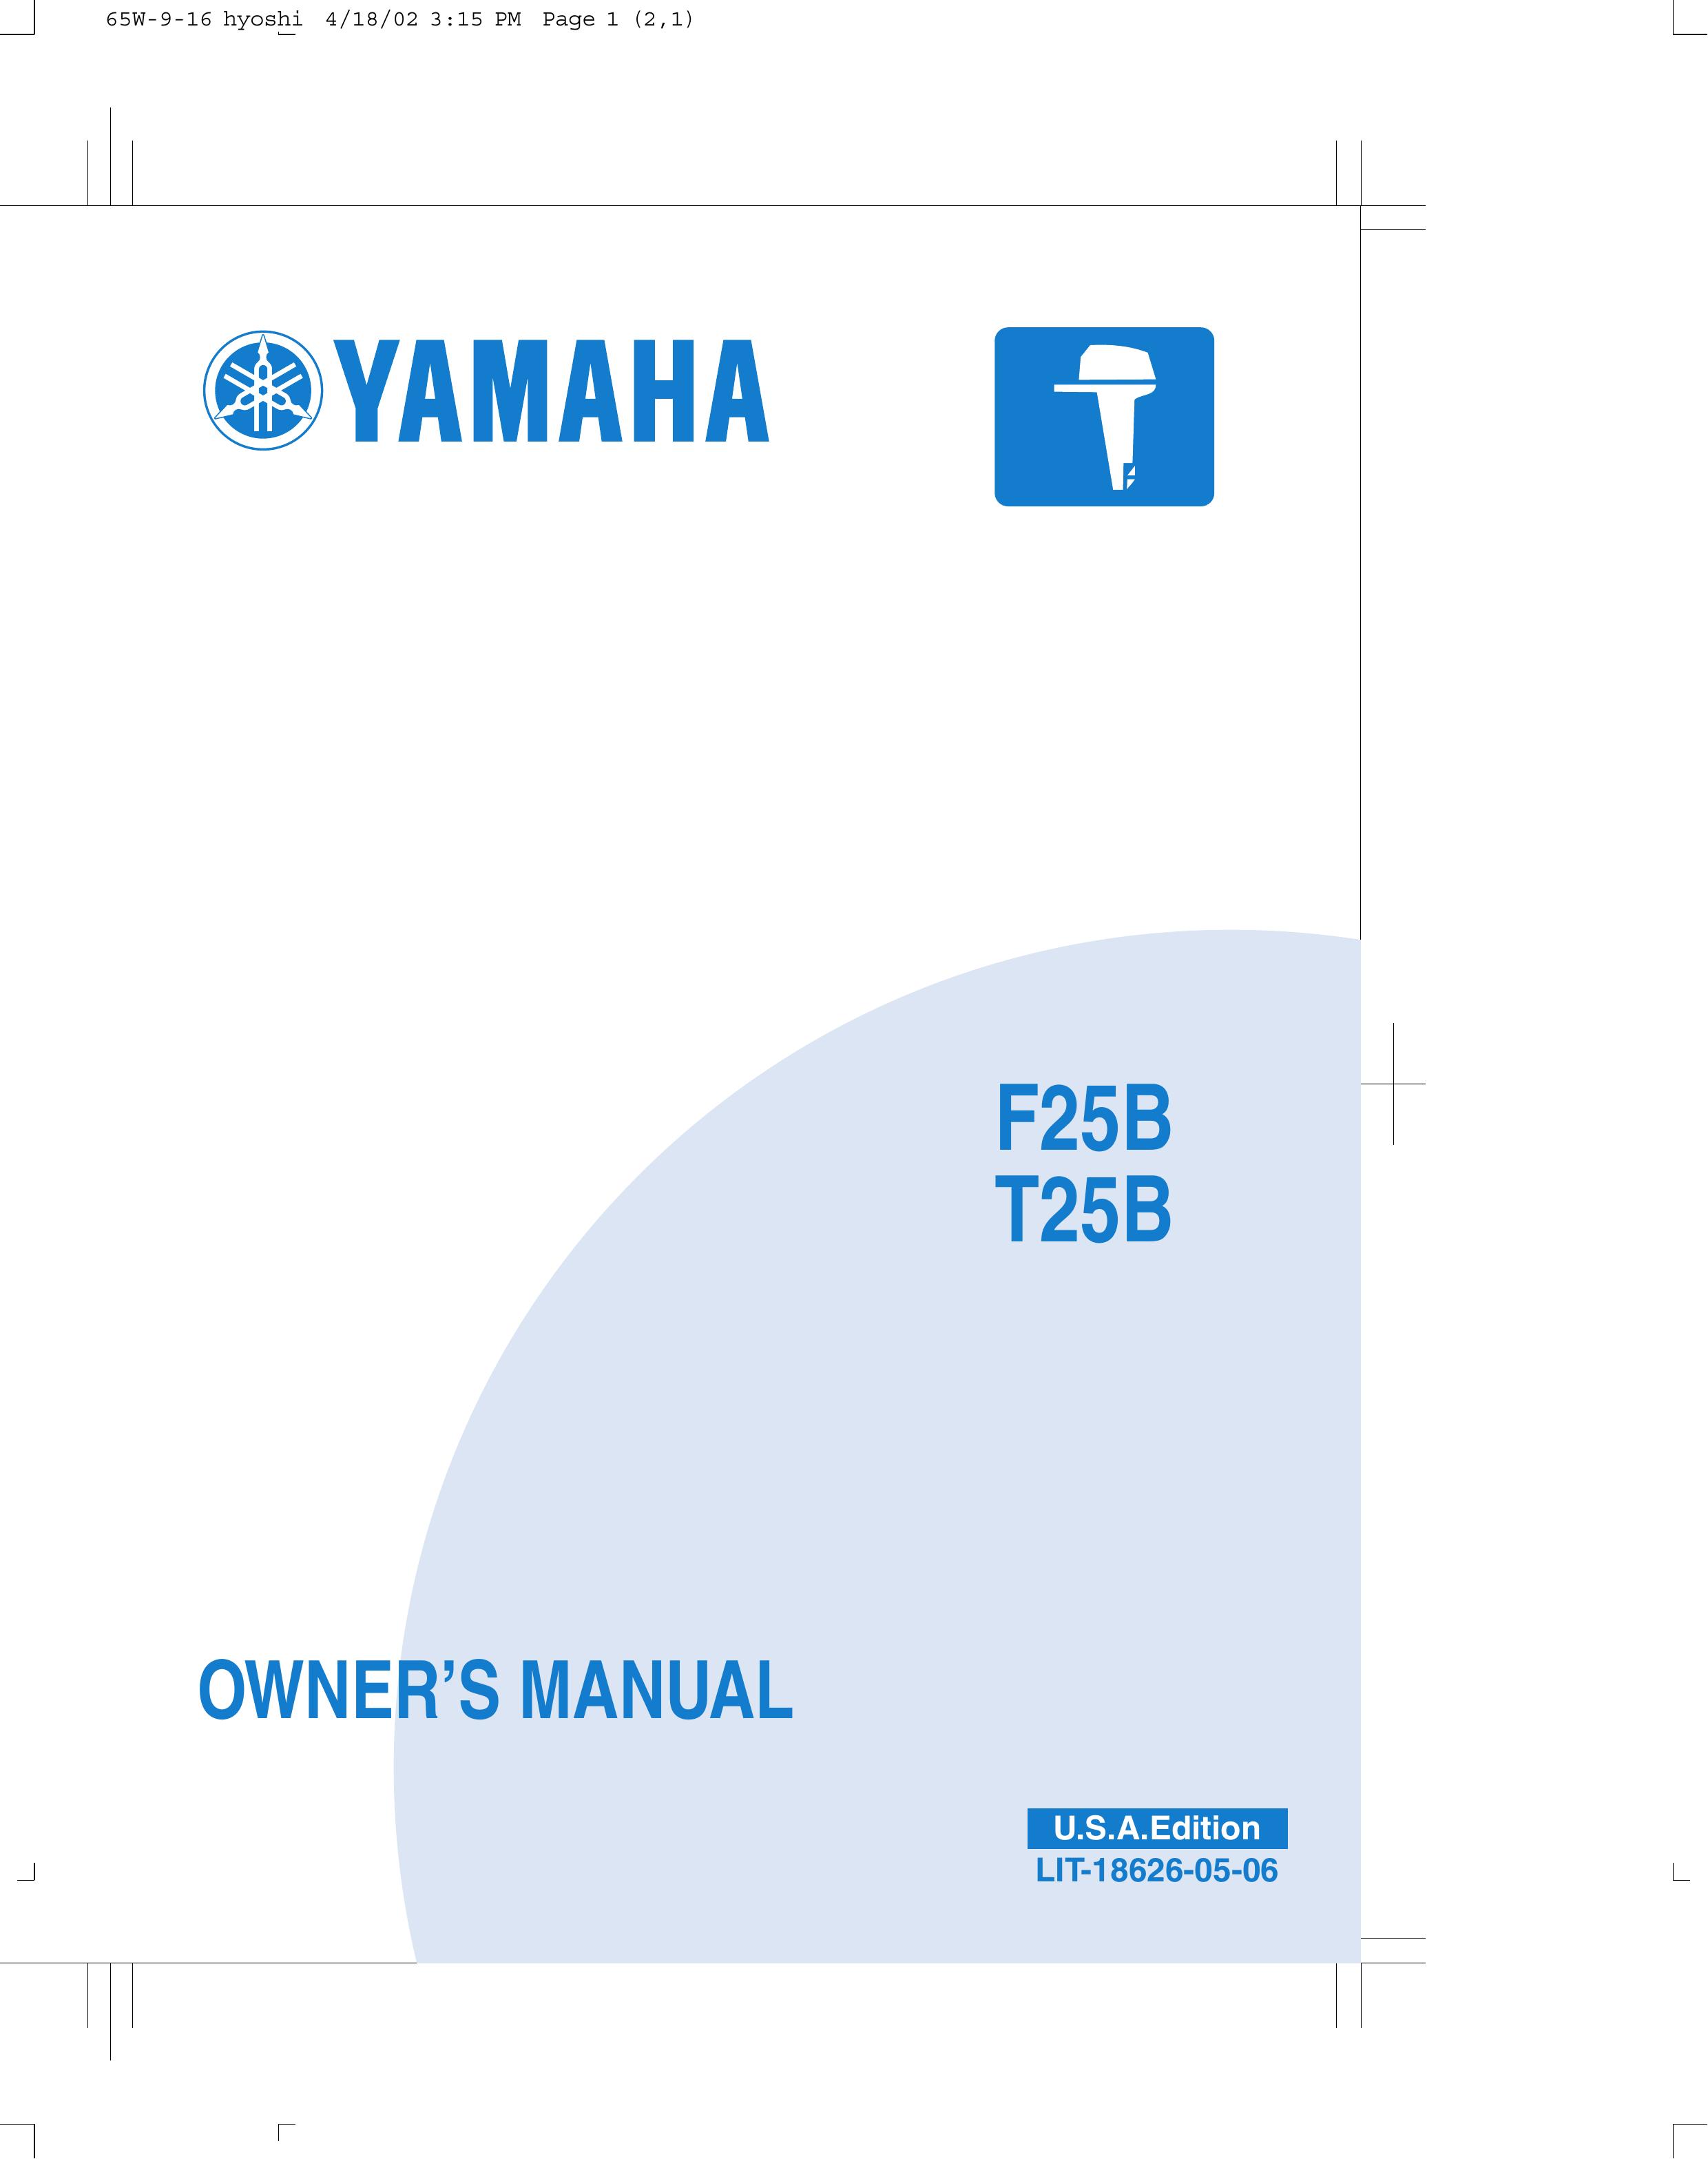 Yamaha F25B Boating Equipment User Manual